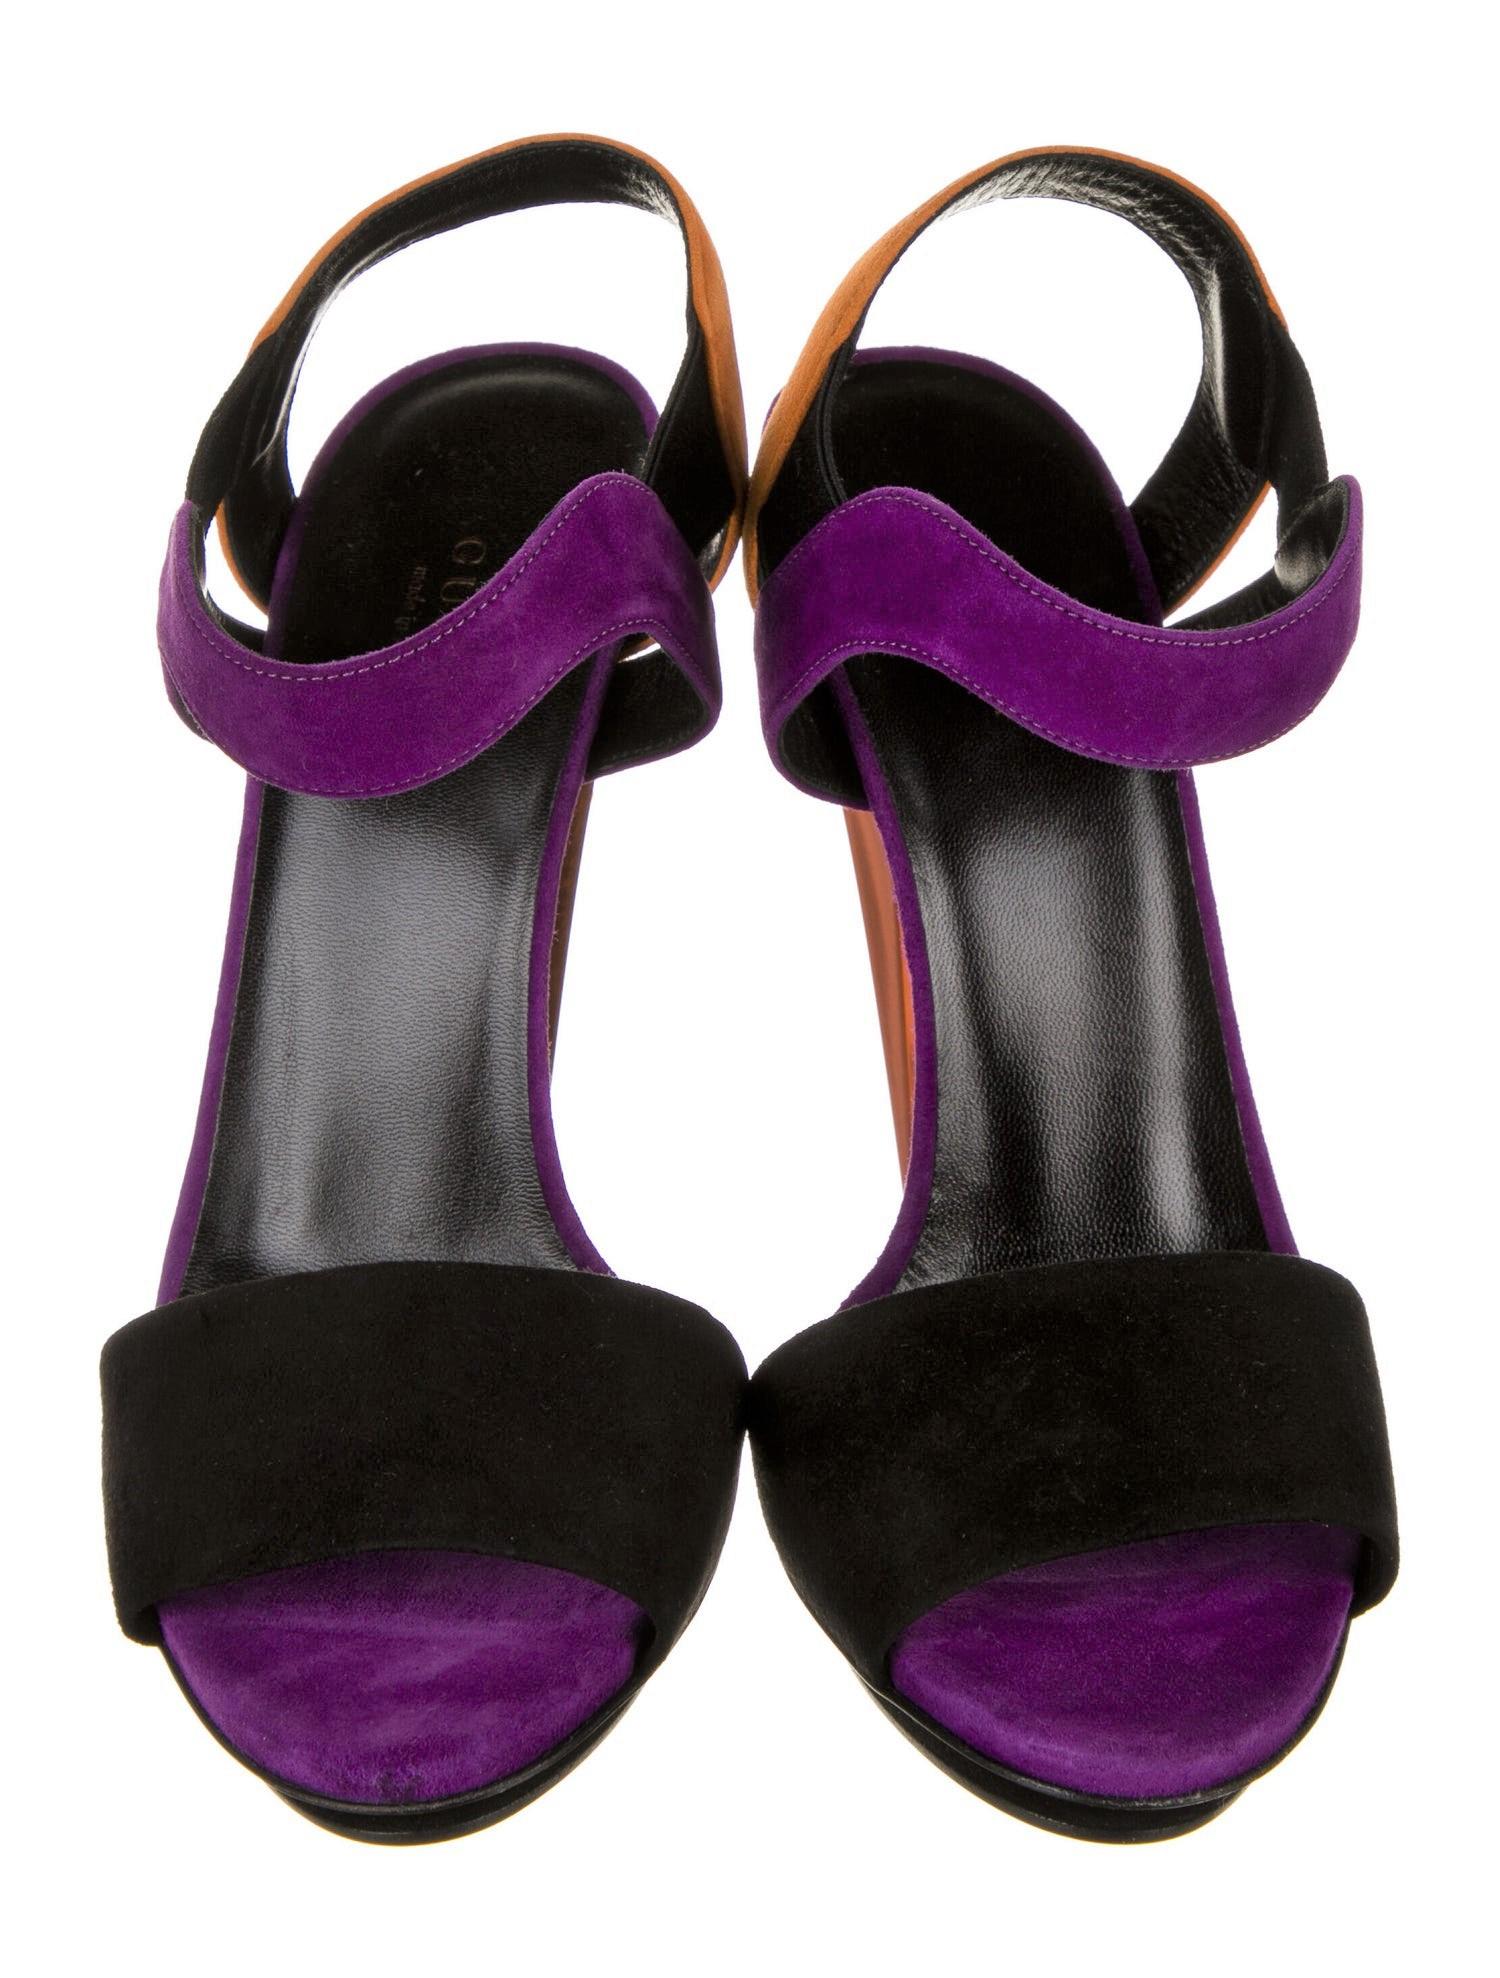 New Gucci Ad Runway 2014 Purple Orange Suede Mirrored Pump Heels Sz 39.5 For Sale 3